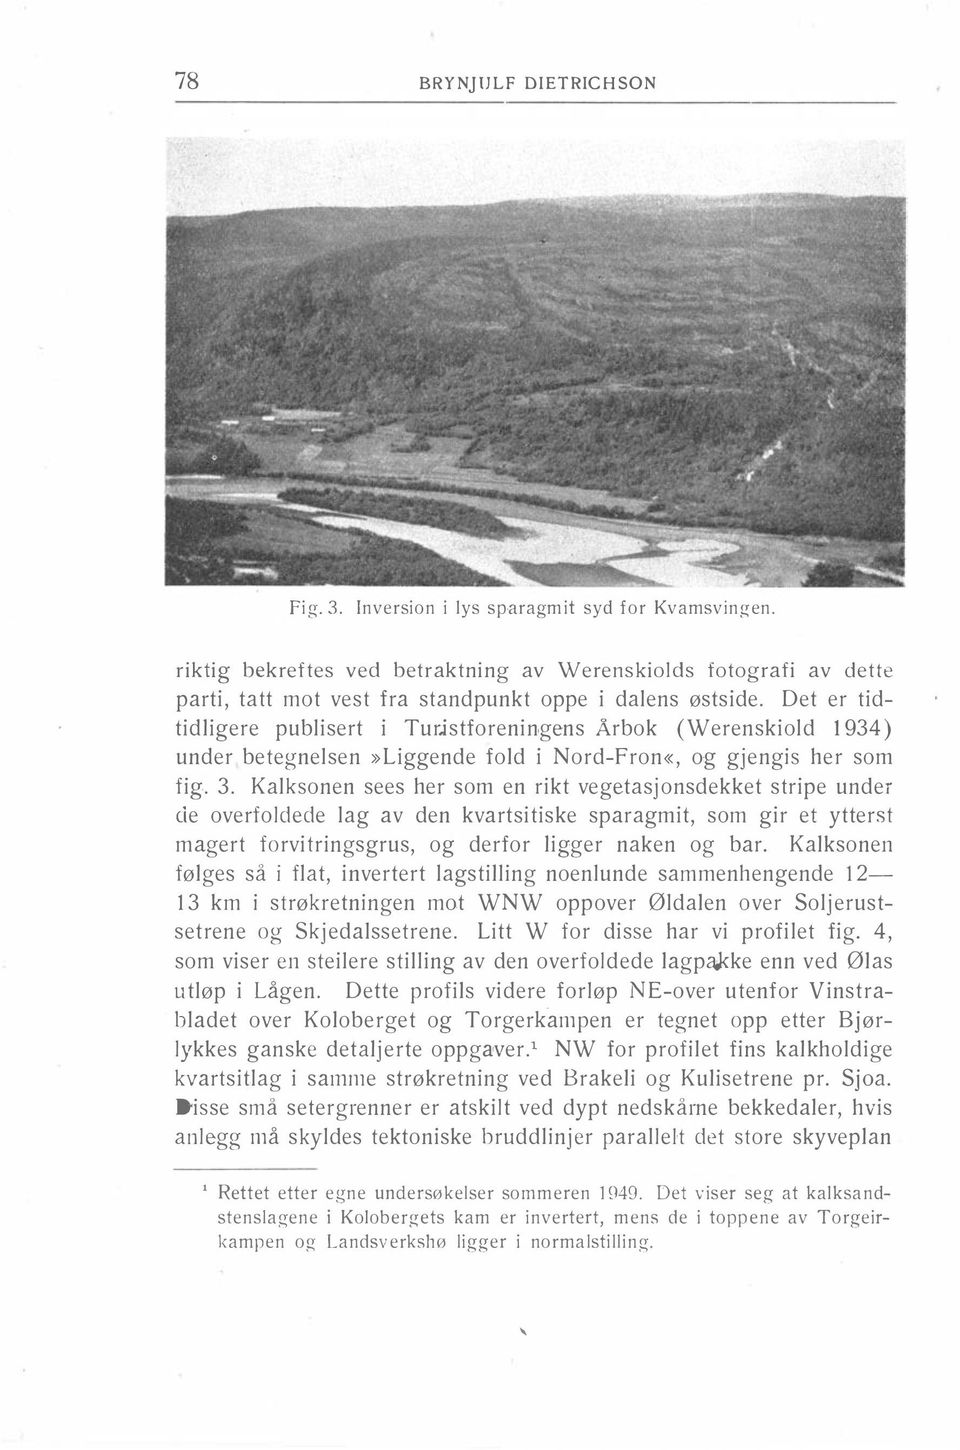 Det er tidtidligere publisert i Turjstforeningens Årbok (Werenskiold 1934) under betegnelsen»liggende fold i Nord-Fron«, og gjengis her som fig. 3.